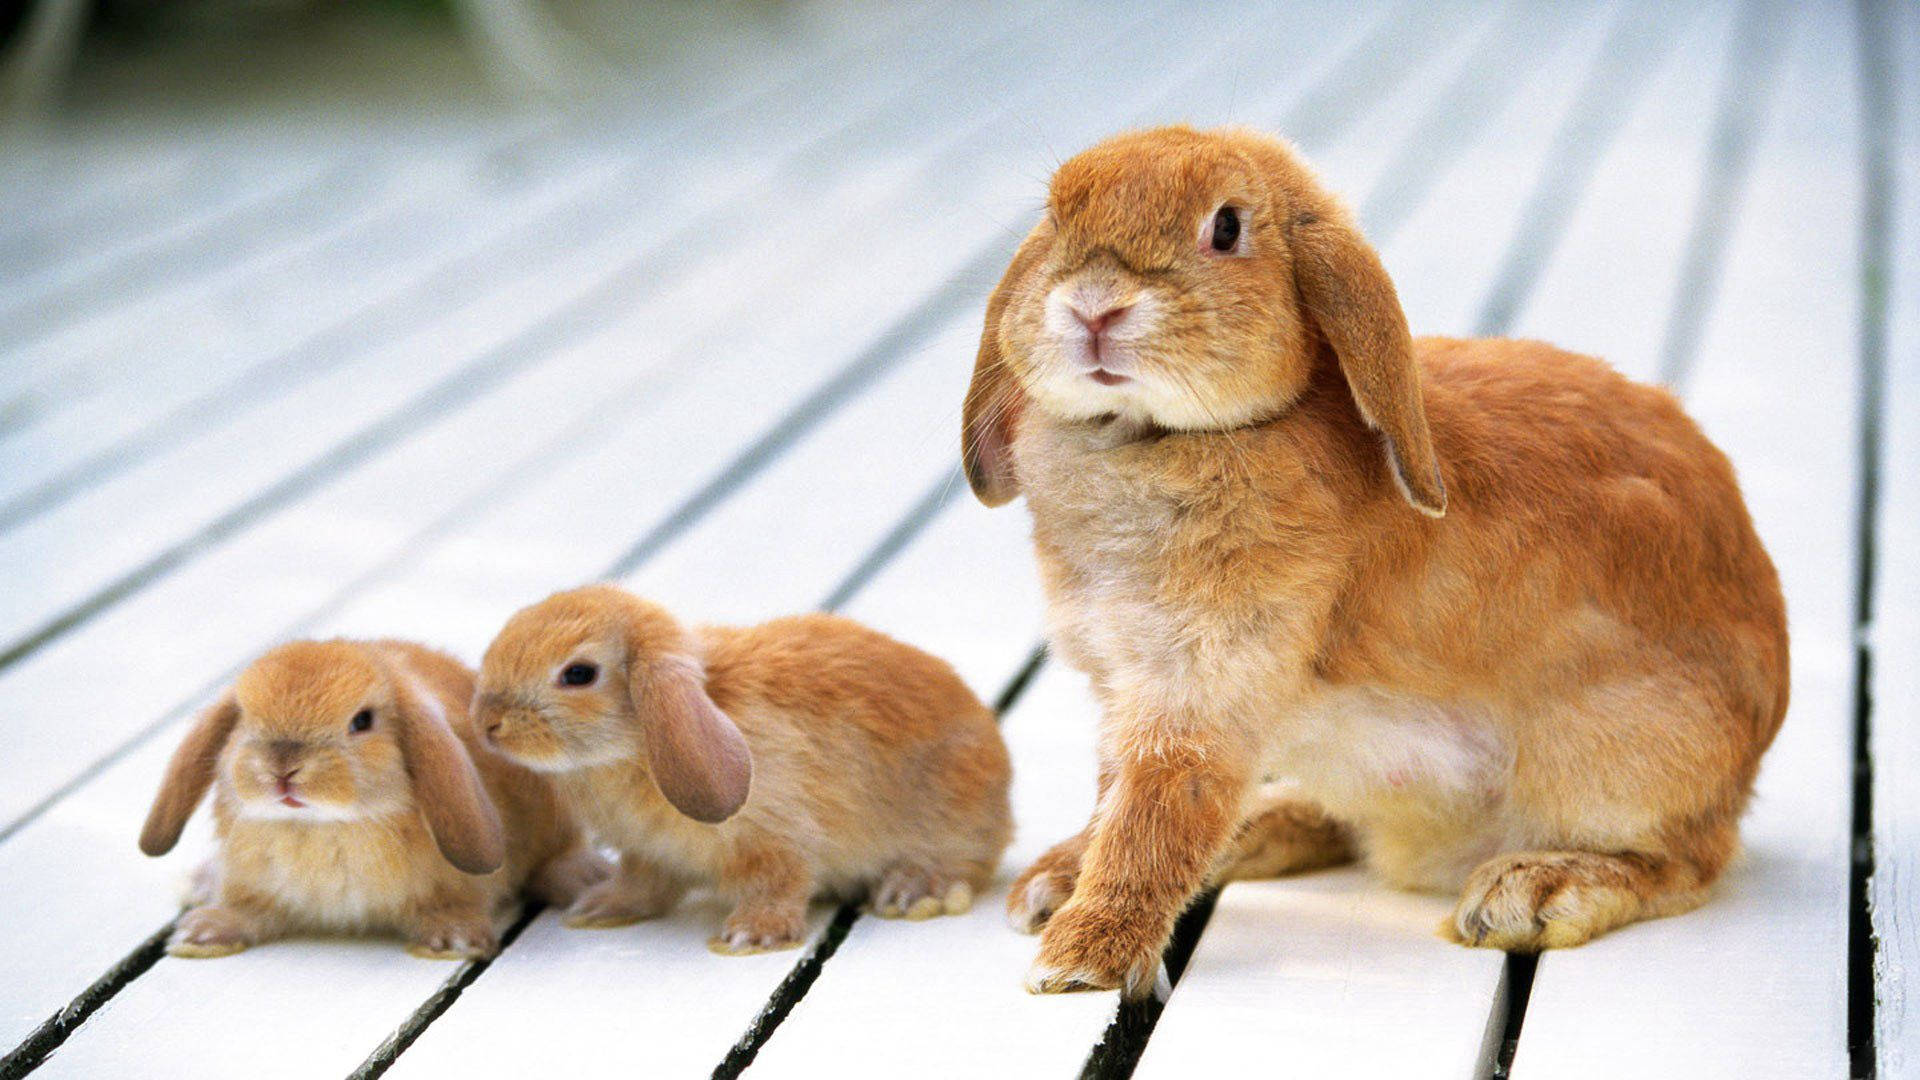 Rabbit Family On The Floor Background